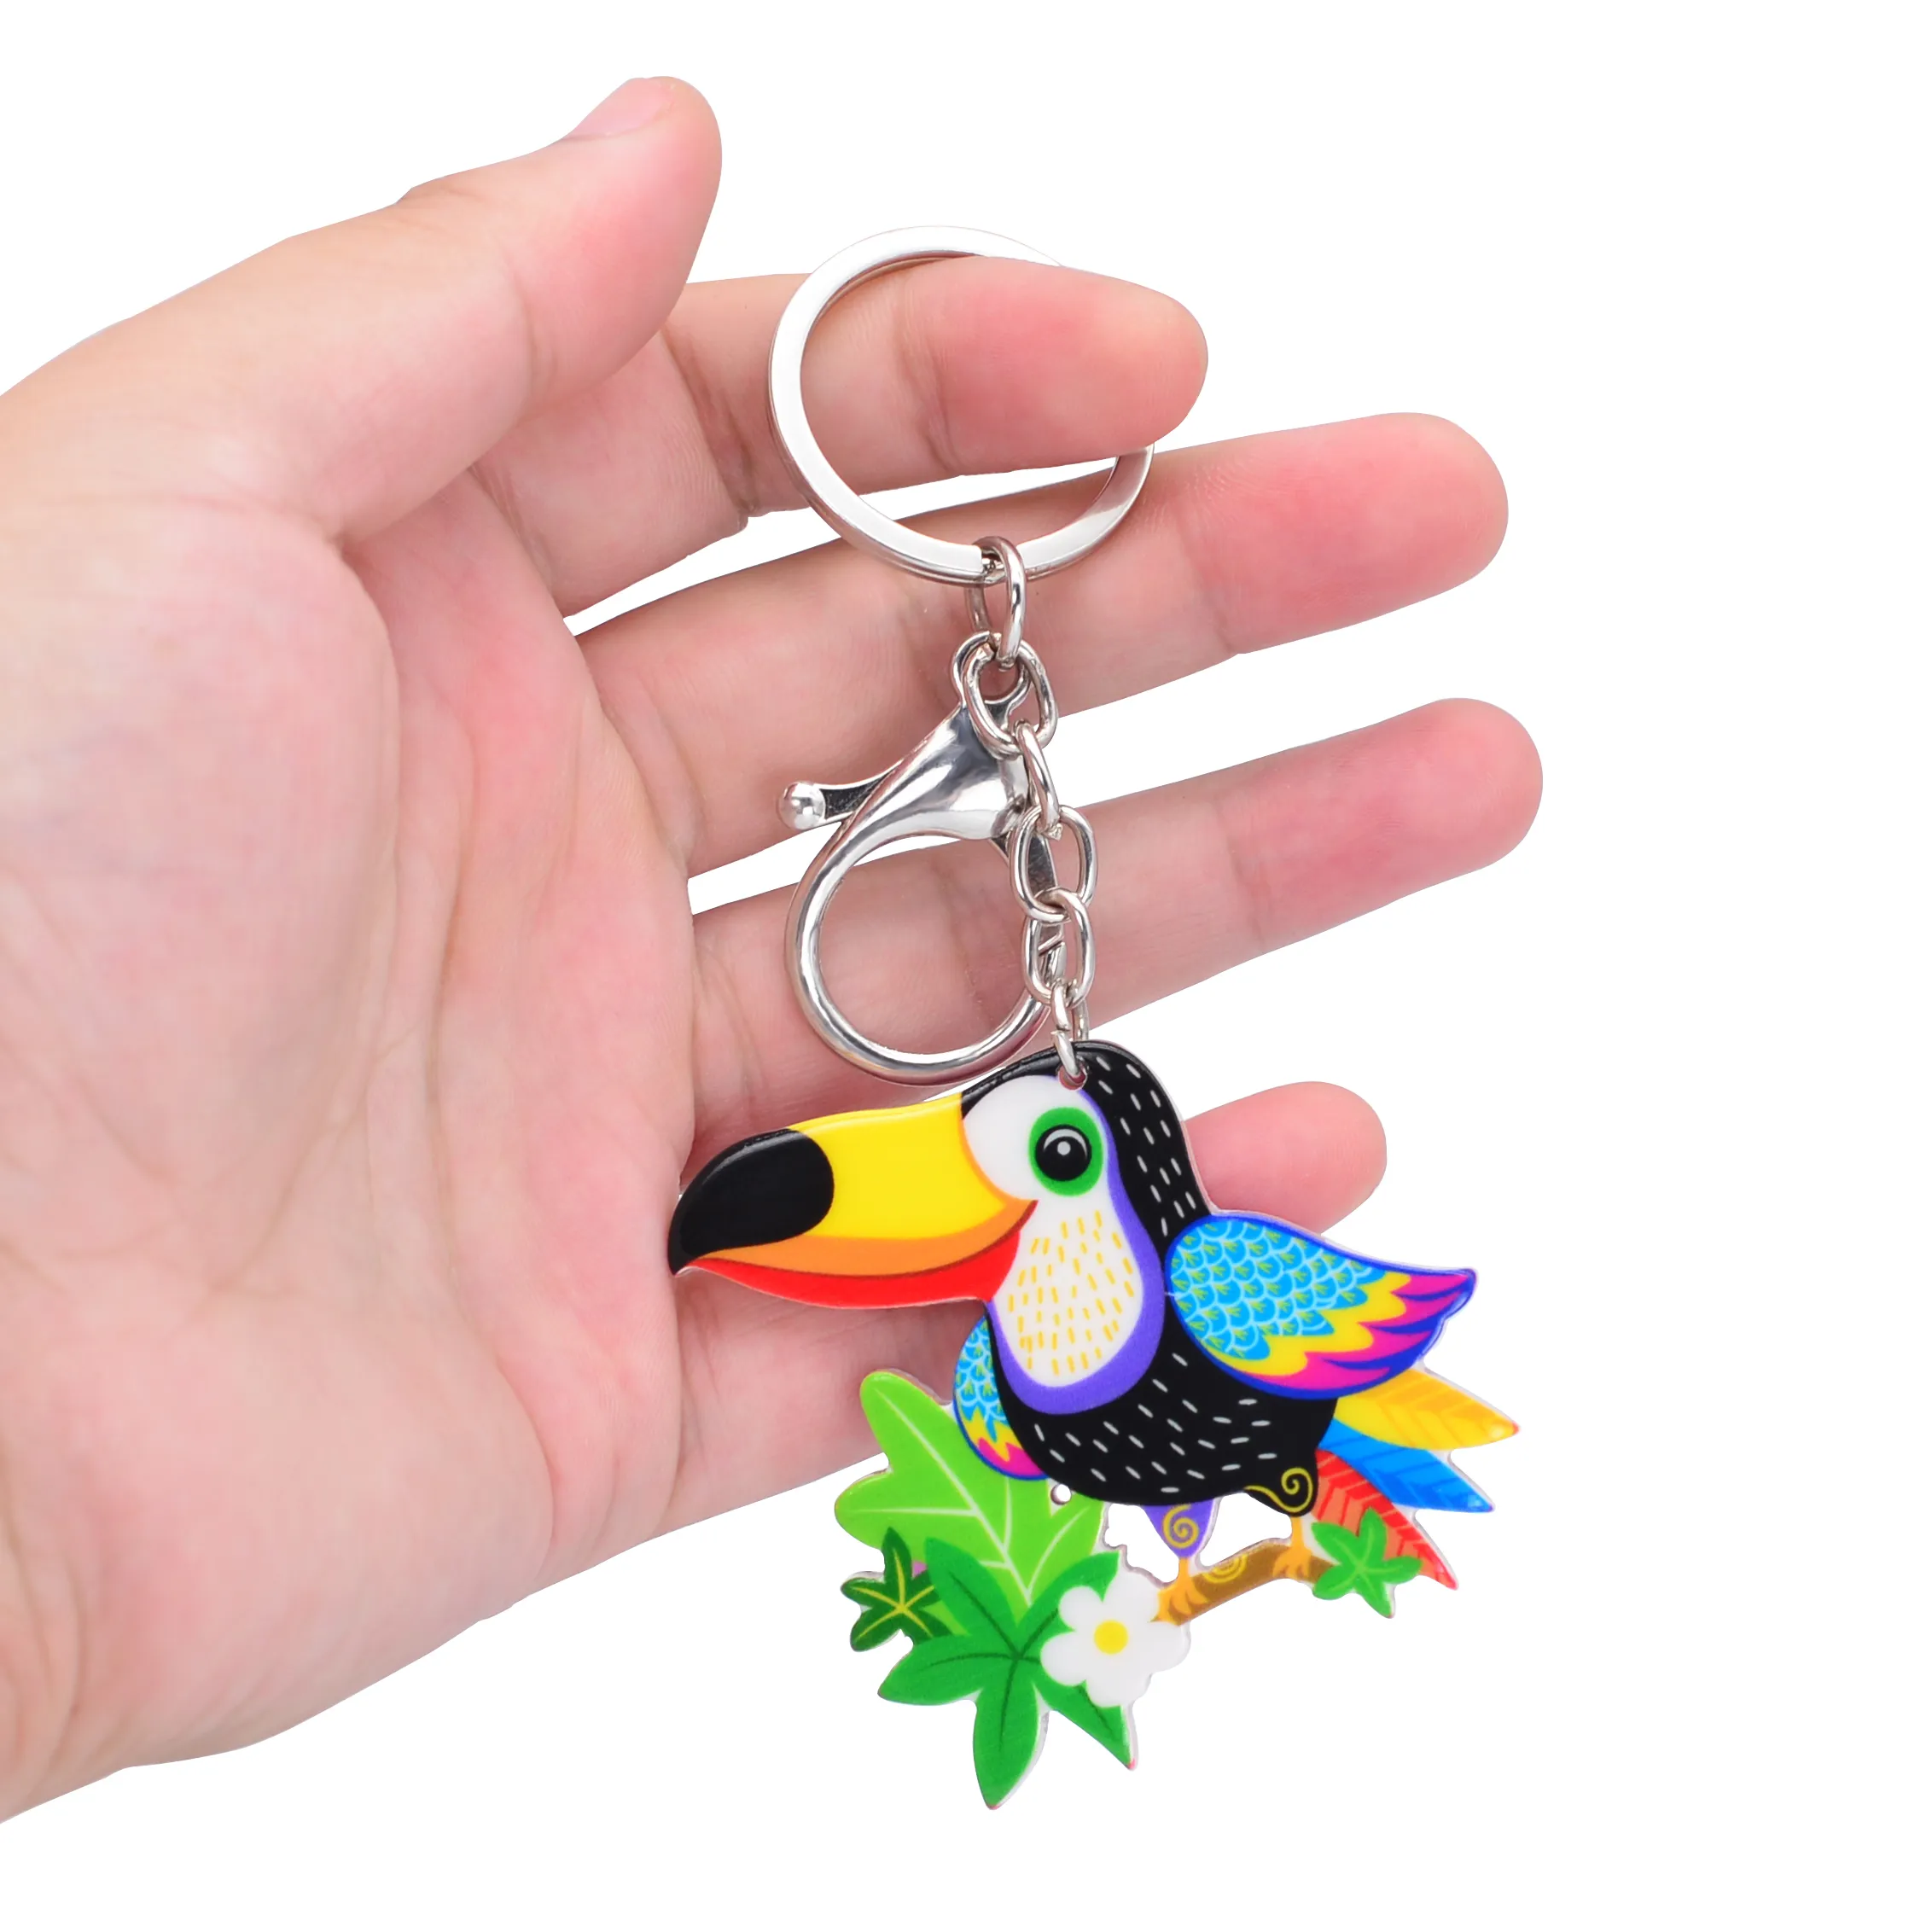 Cute Cartoon Acrylic Keychains Creative Toucan Bird Animal Key Chain Jewelry For Women Kids Girls Gift Car Accessory